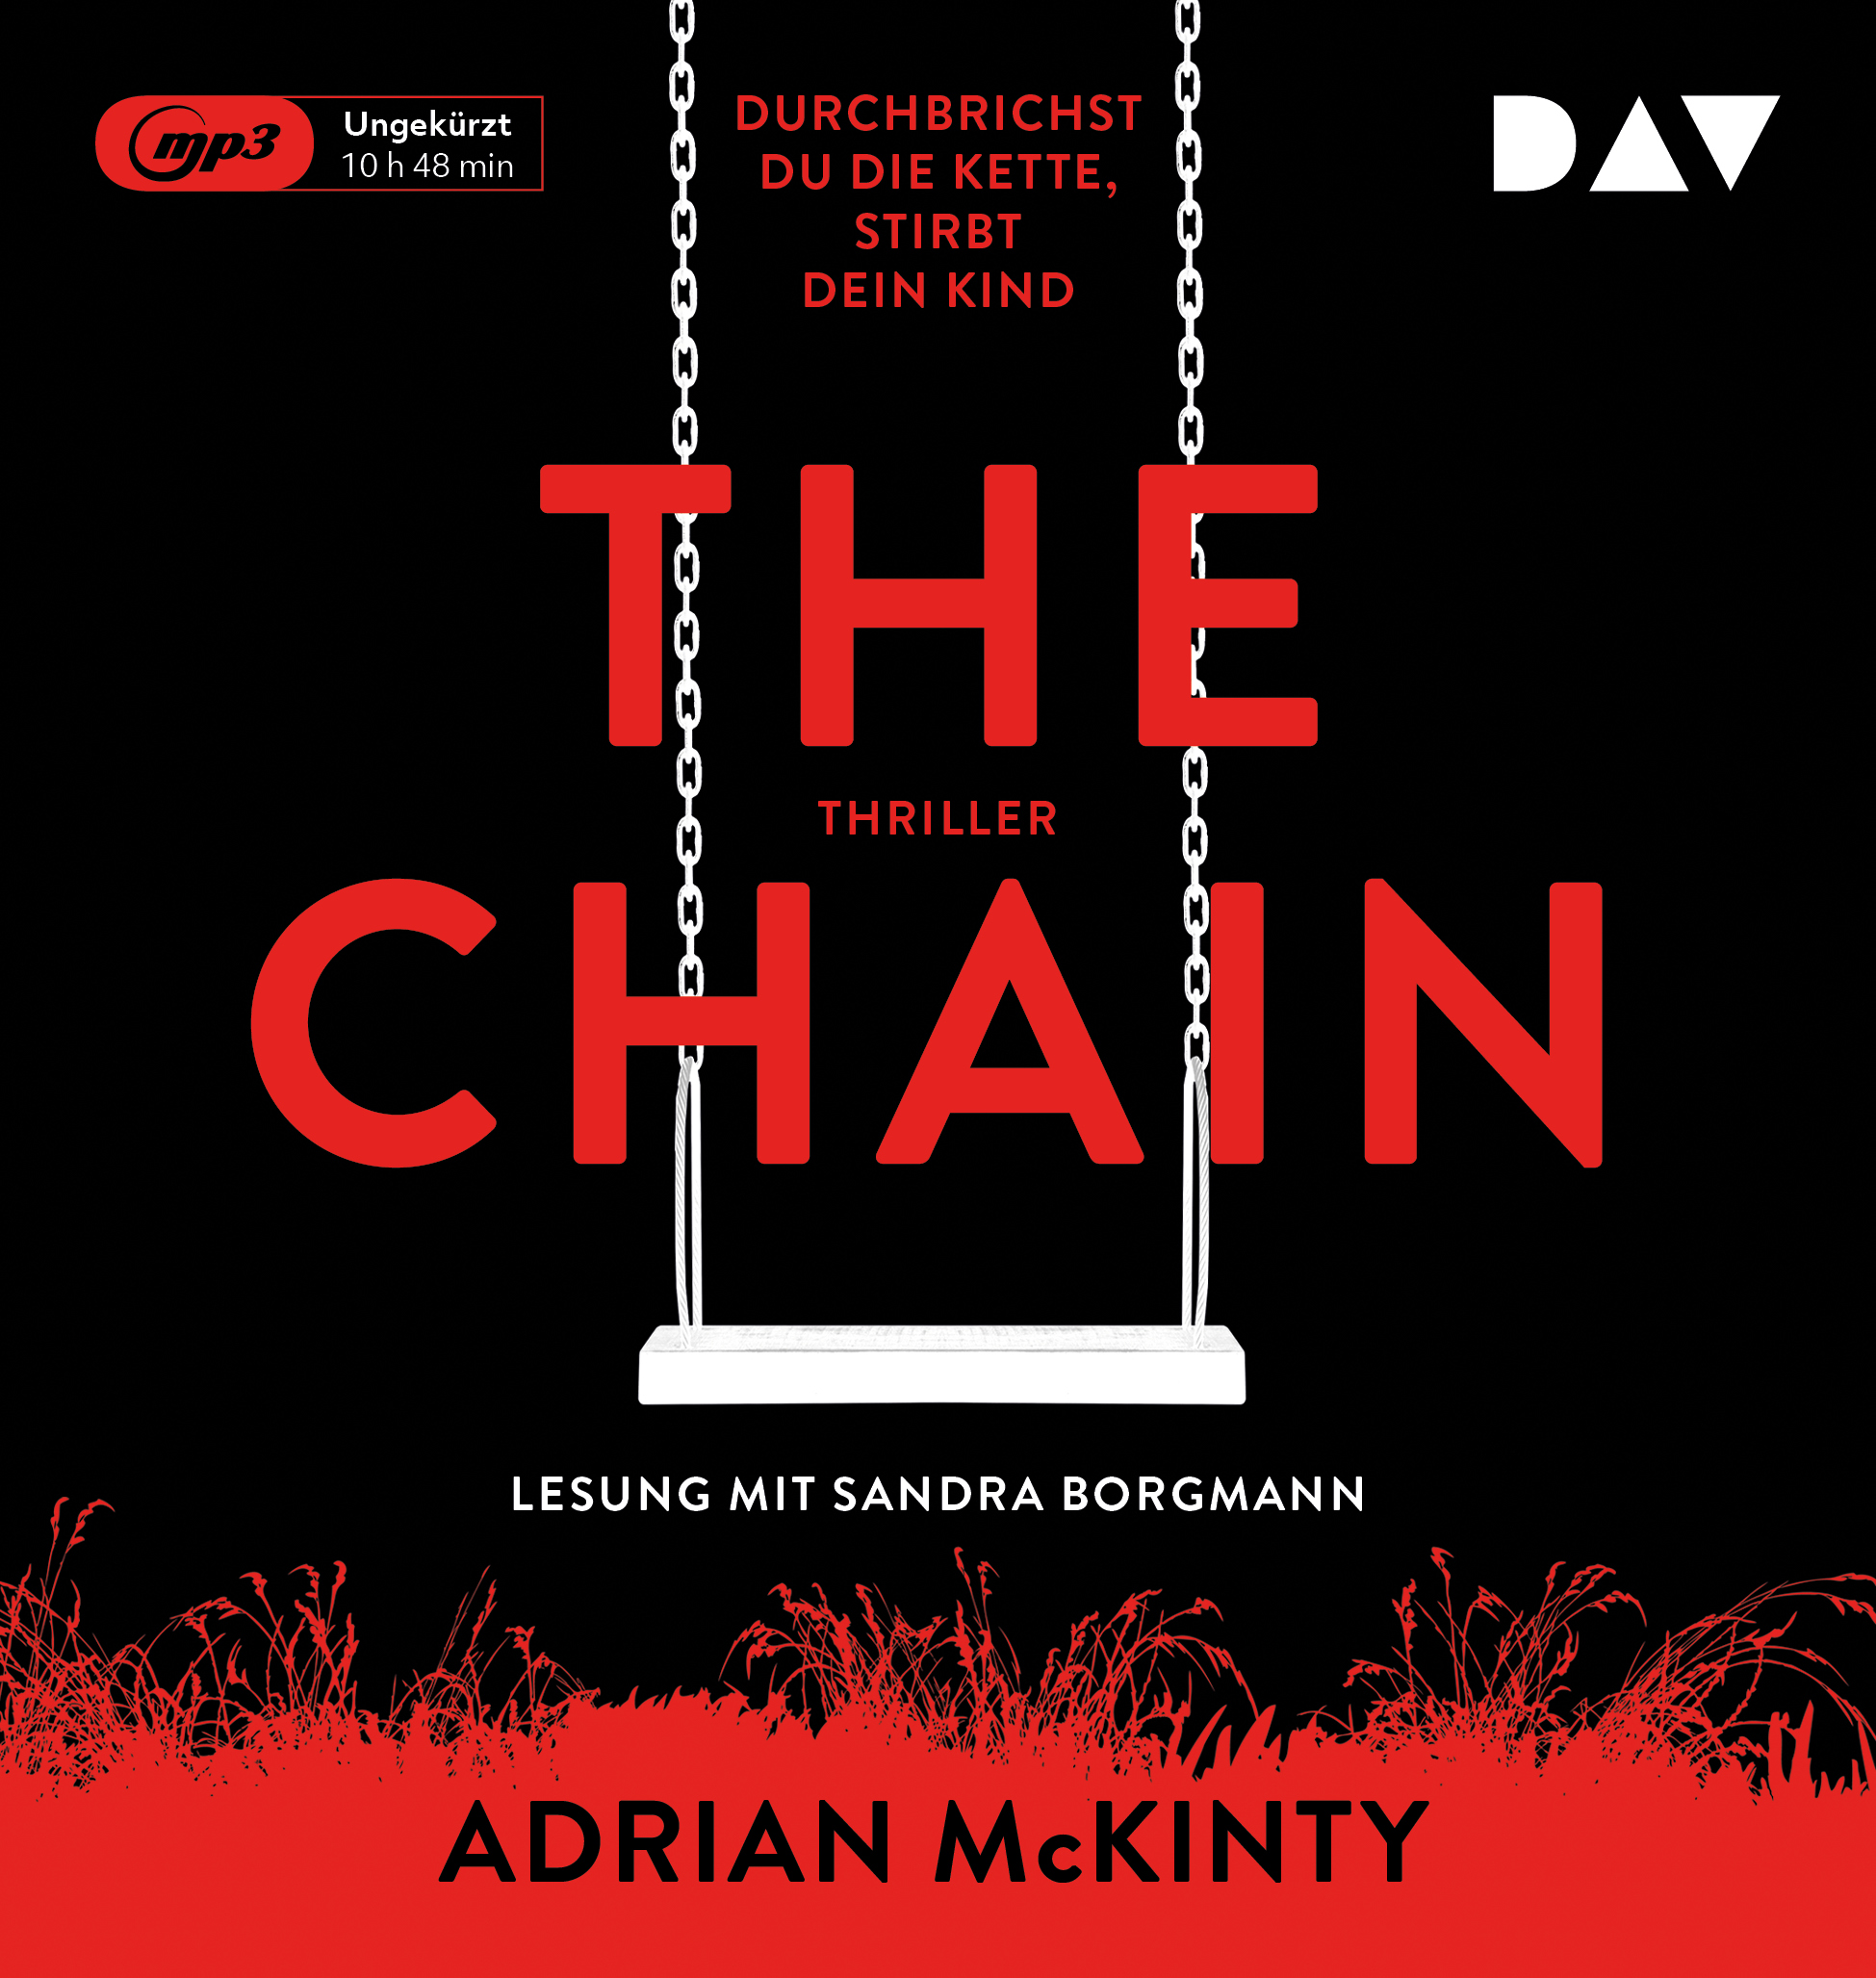 Dein kind. Adrian MCKINTY - the Chain. Обложка the Chain арт. Chain перевод. The critical Chain method.